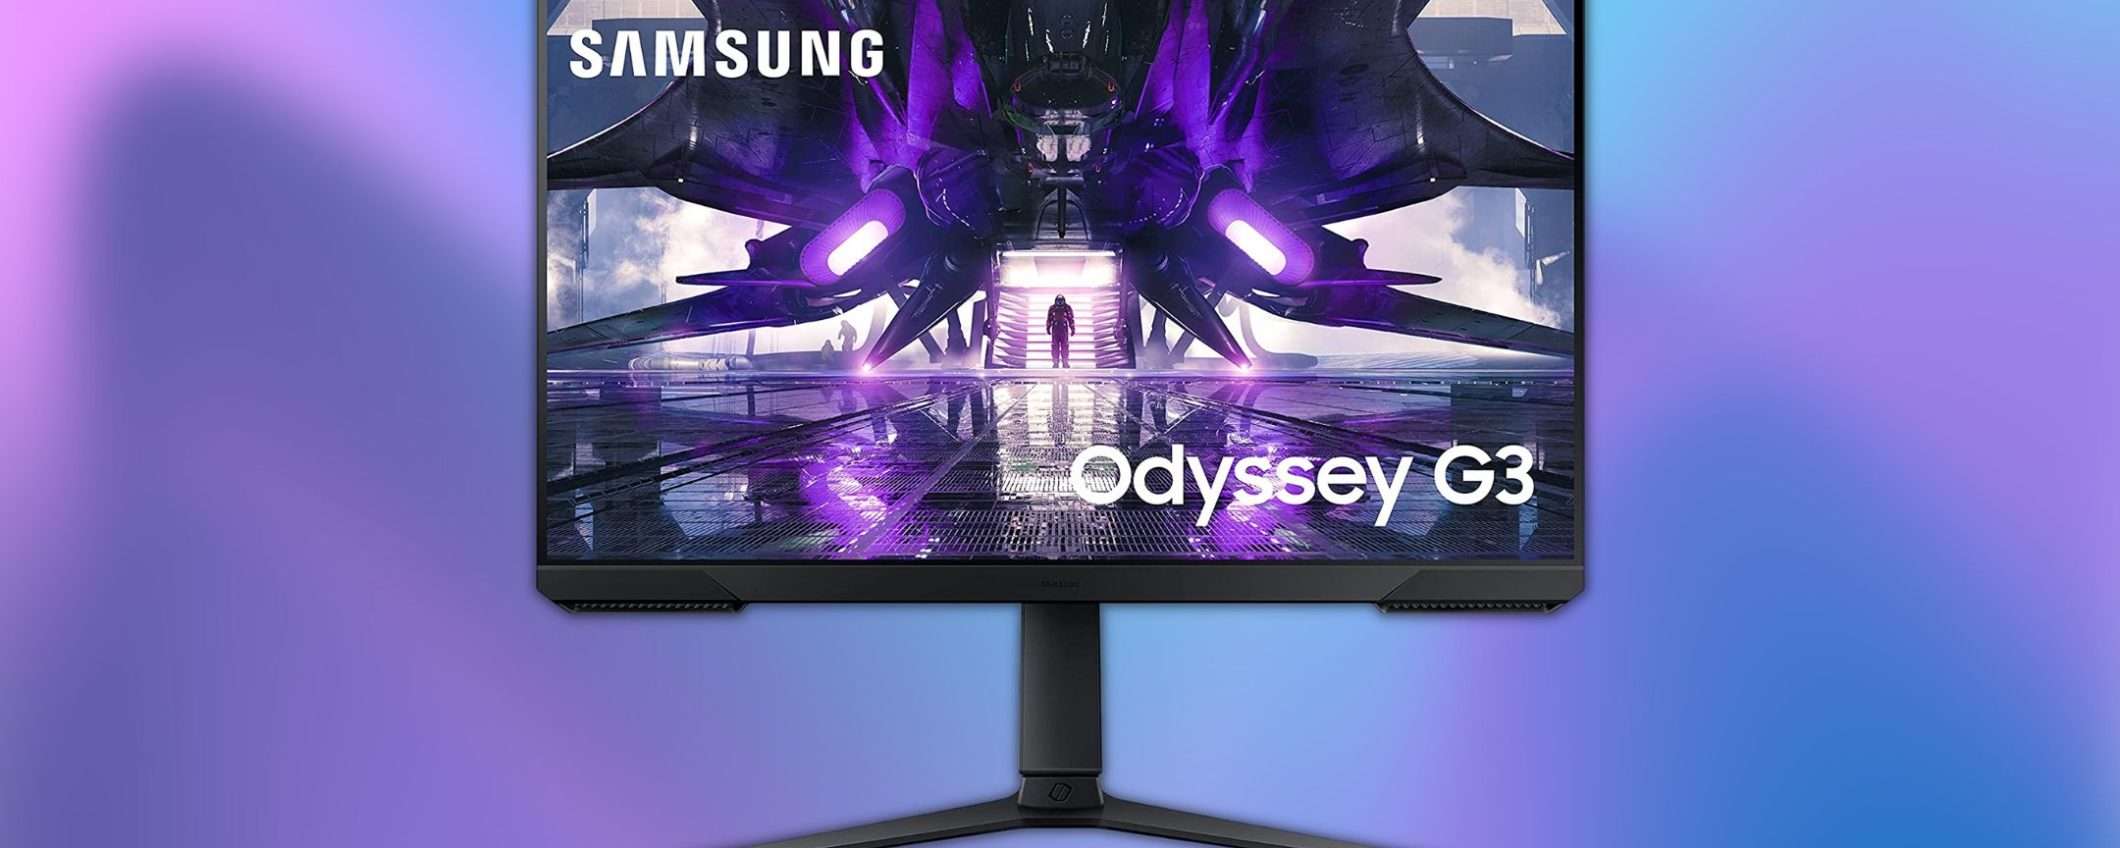 Monitor Samsung Odyssey G3 da 24